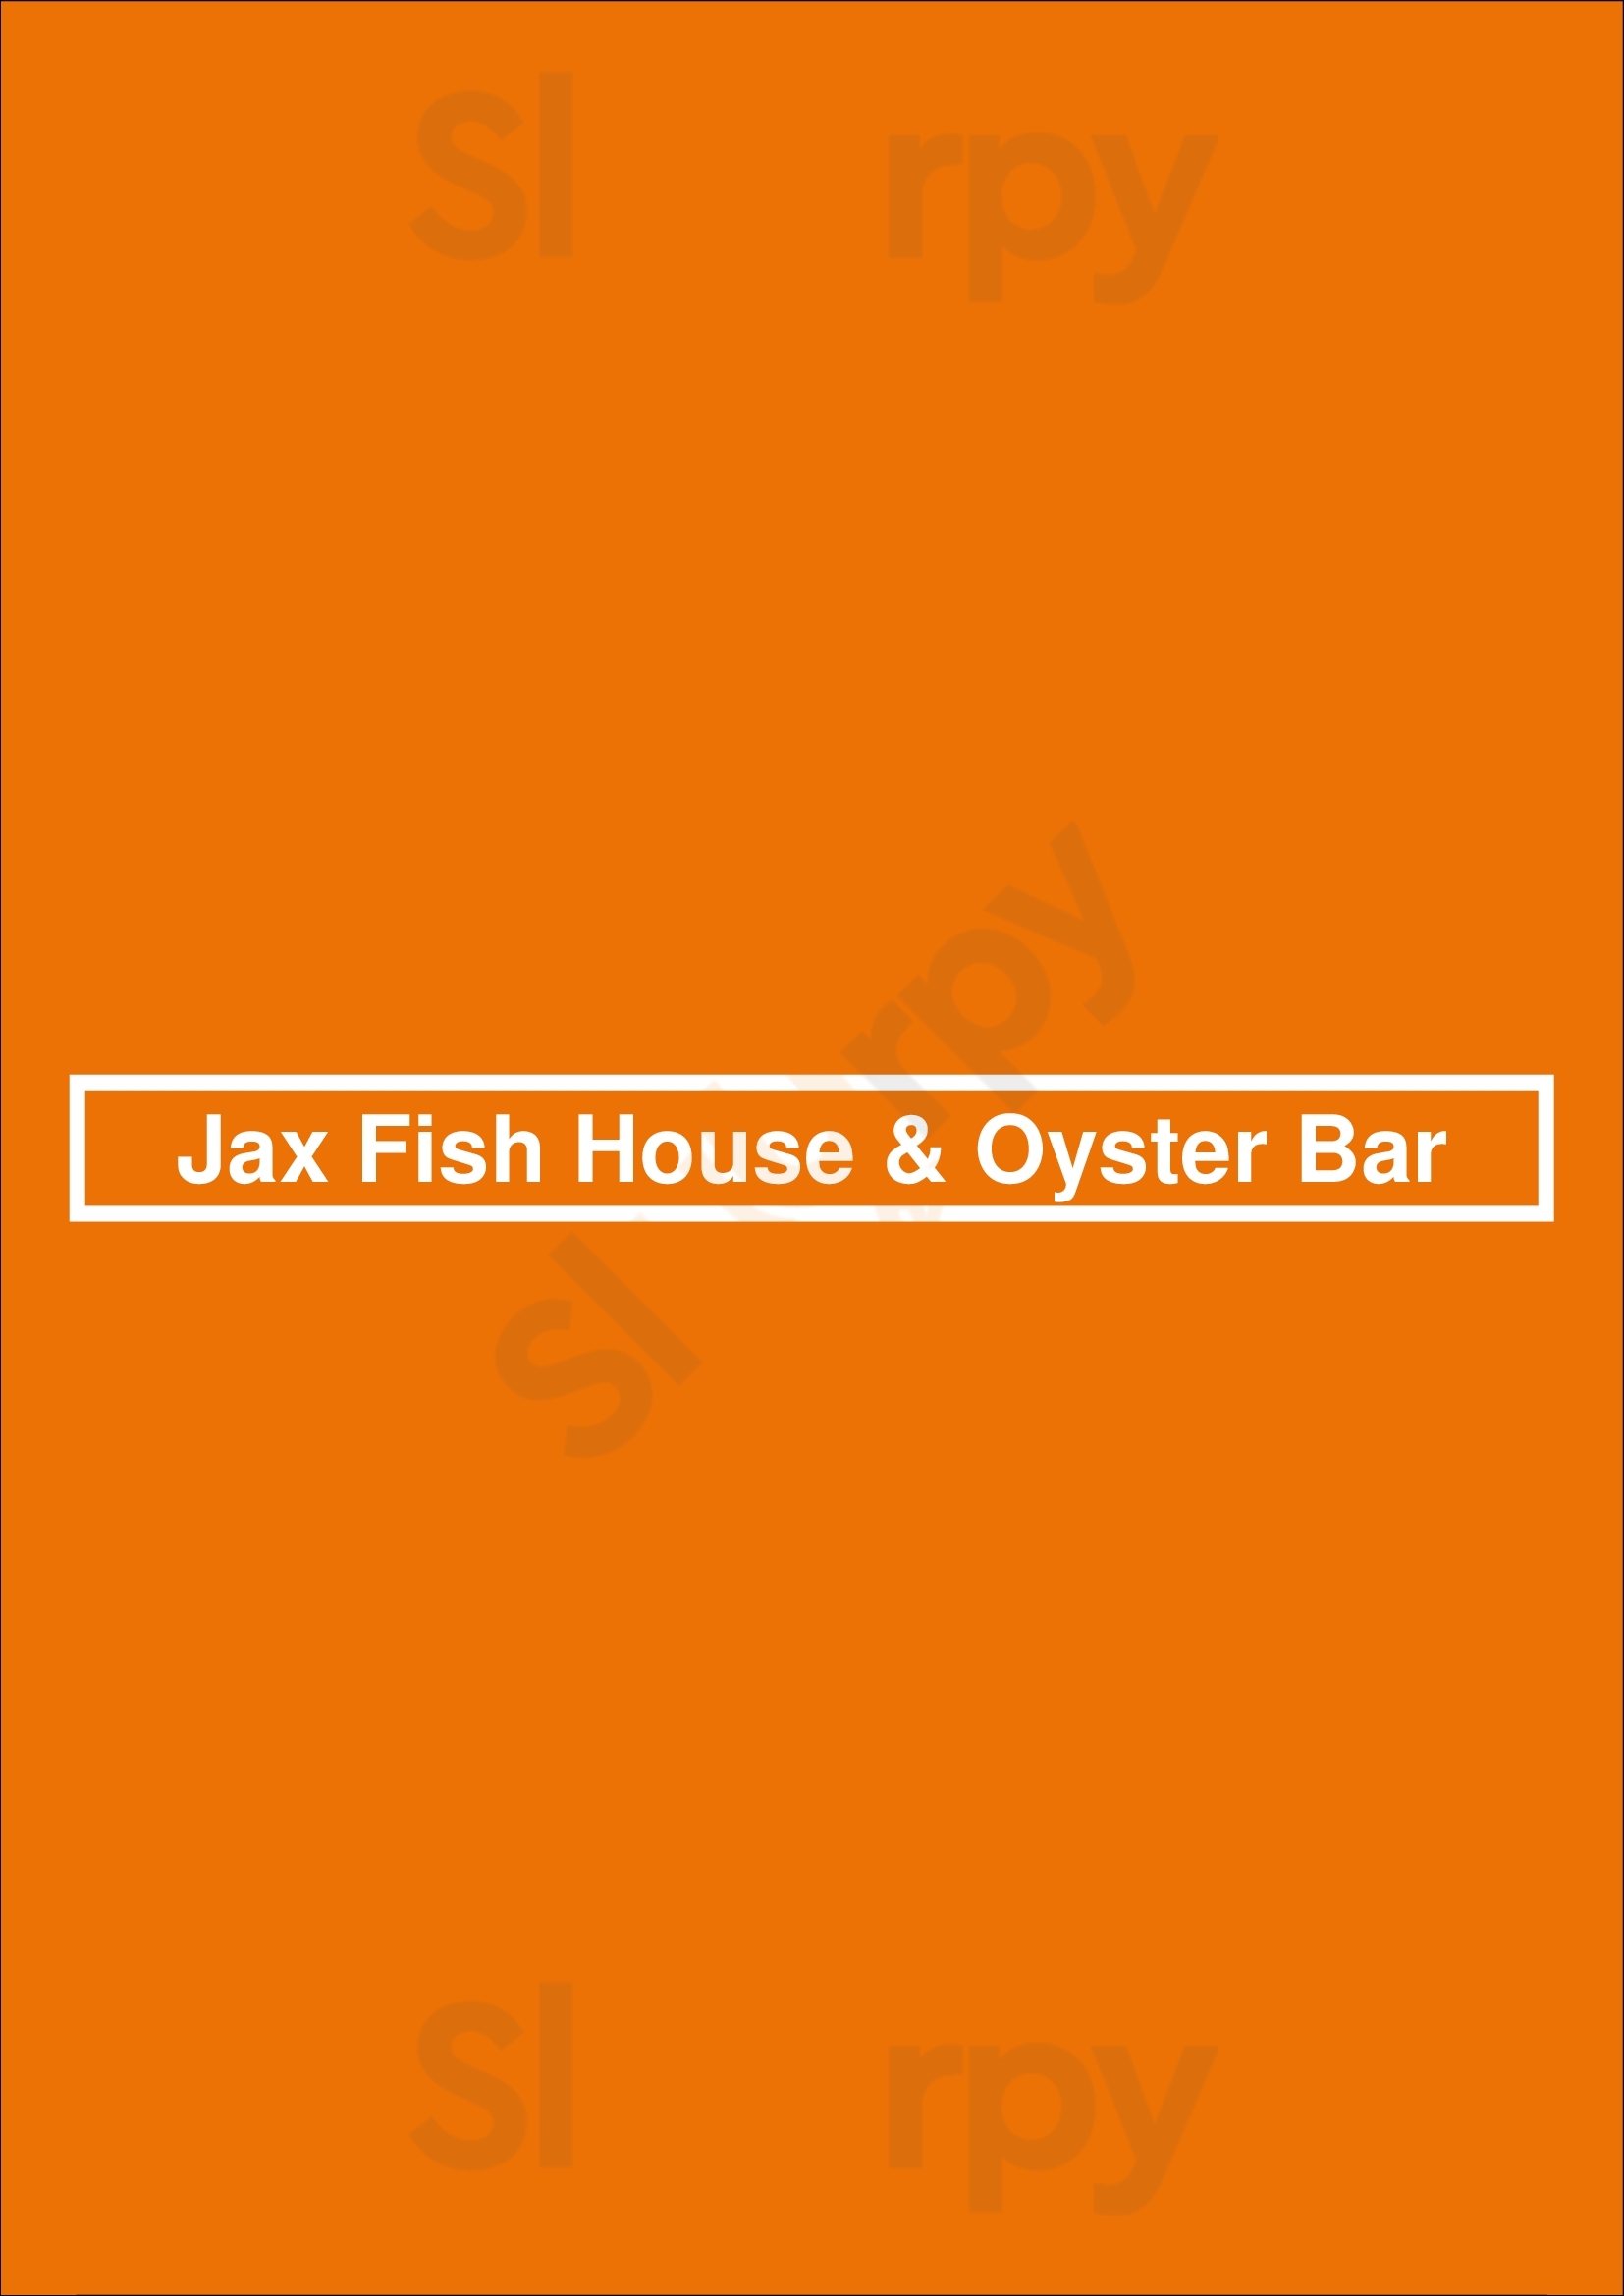 Jax Fish House & Oyster Bar Denver Menu - 1